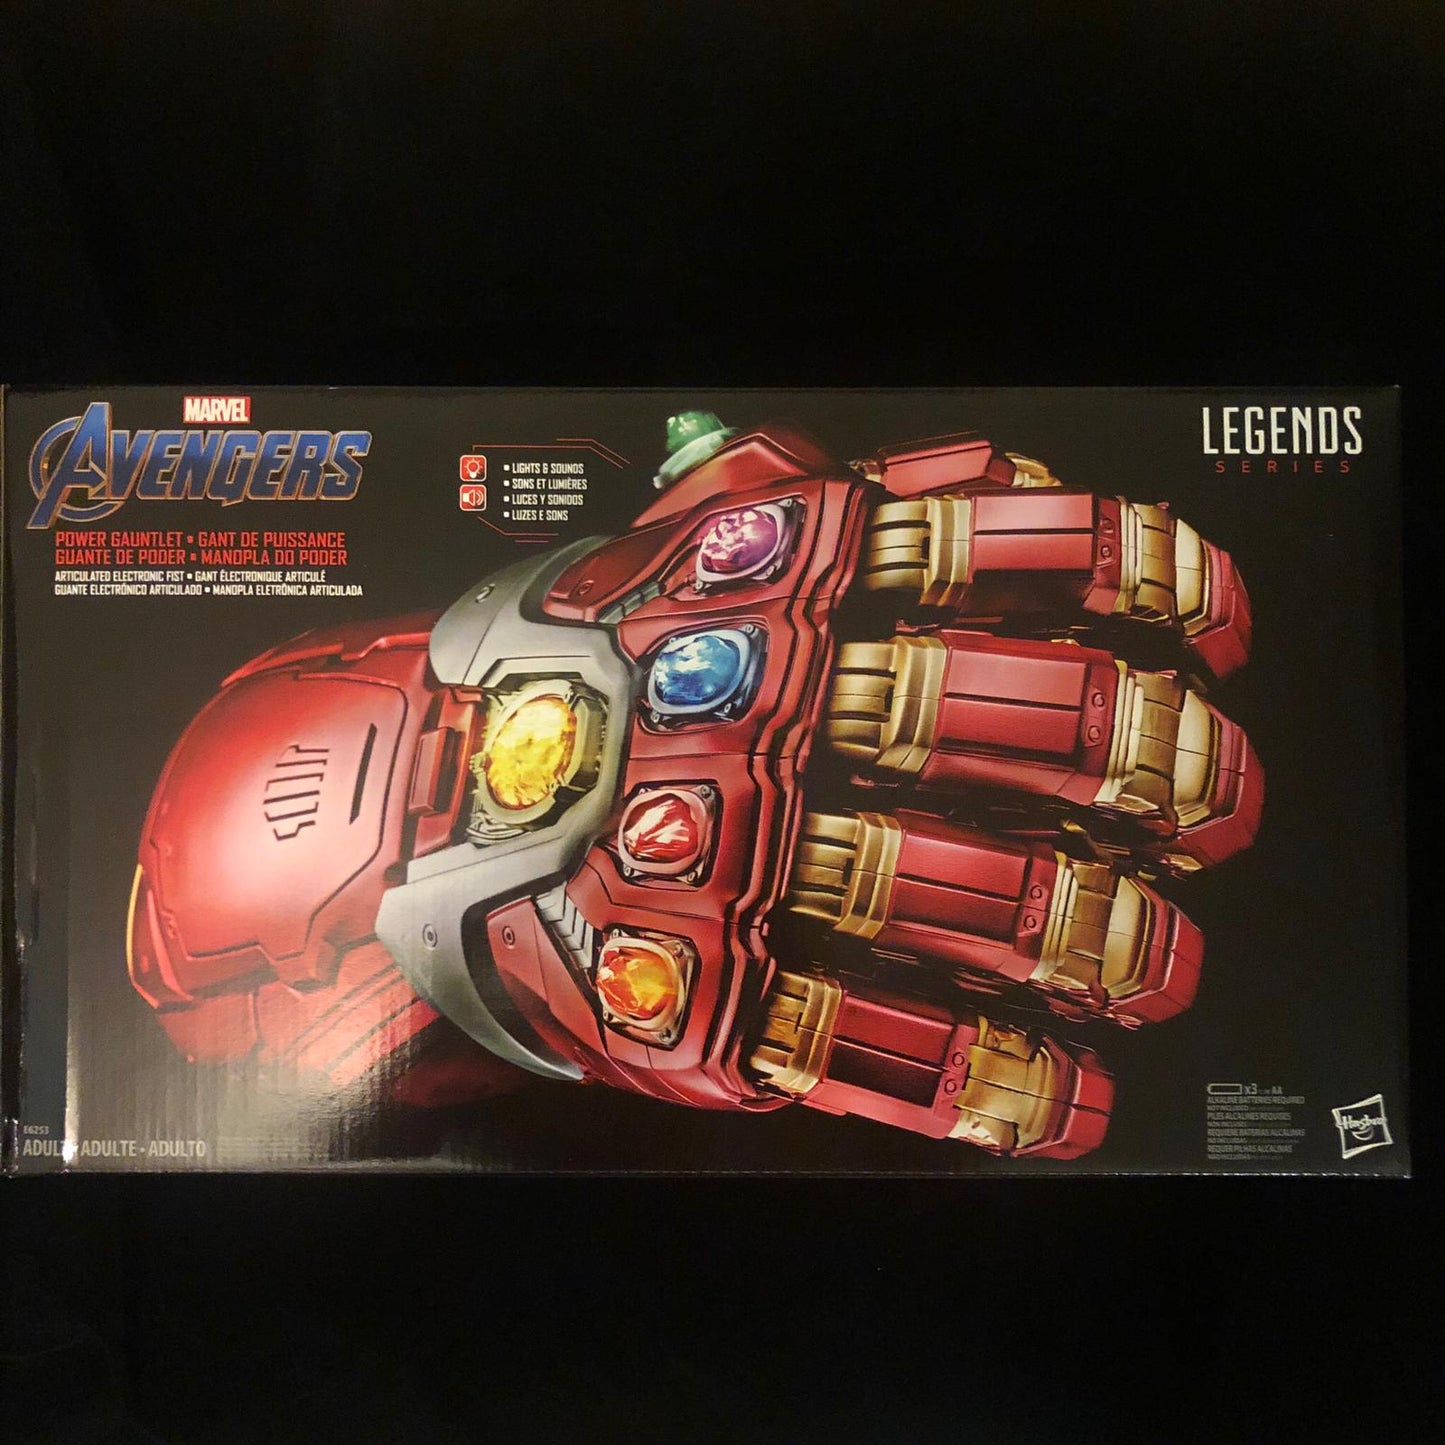 Marvel Legends Series Avengers: Endgame Electronic Power Gauntlet